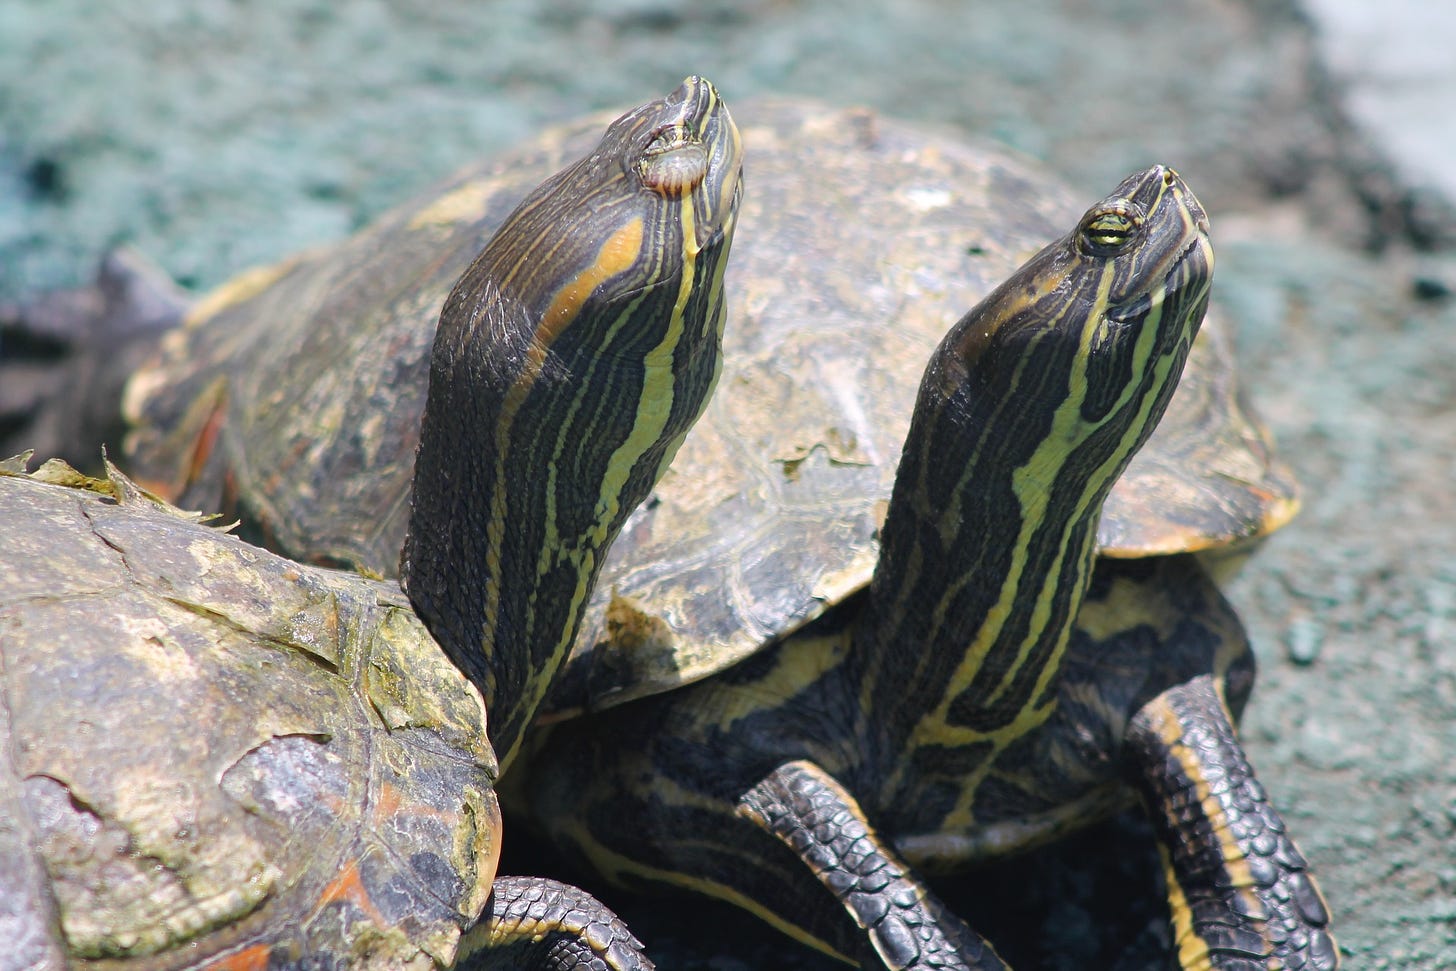 Nicaraguan Turtles